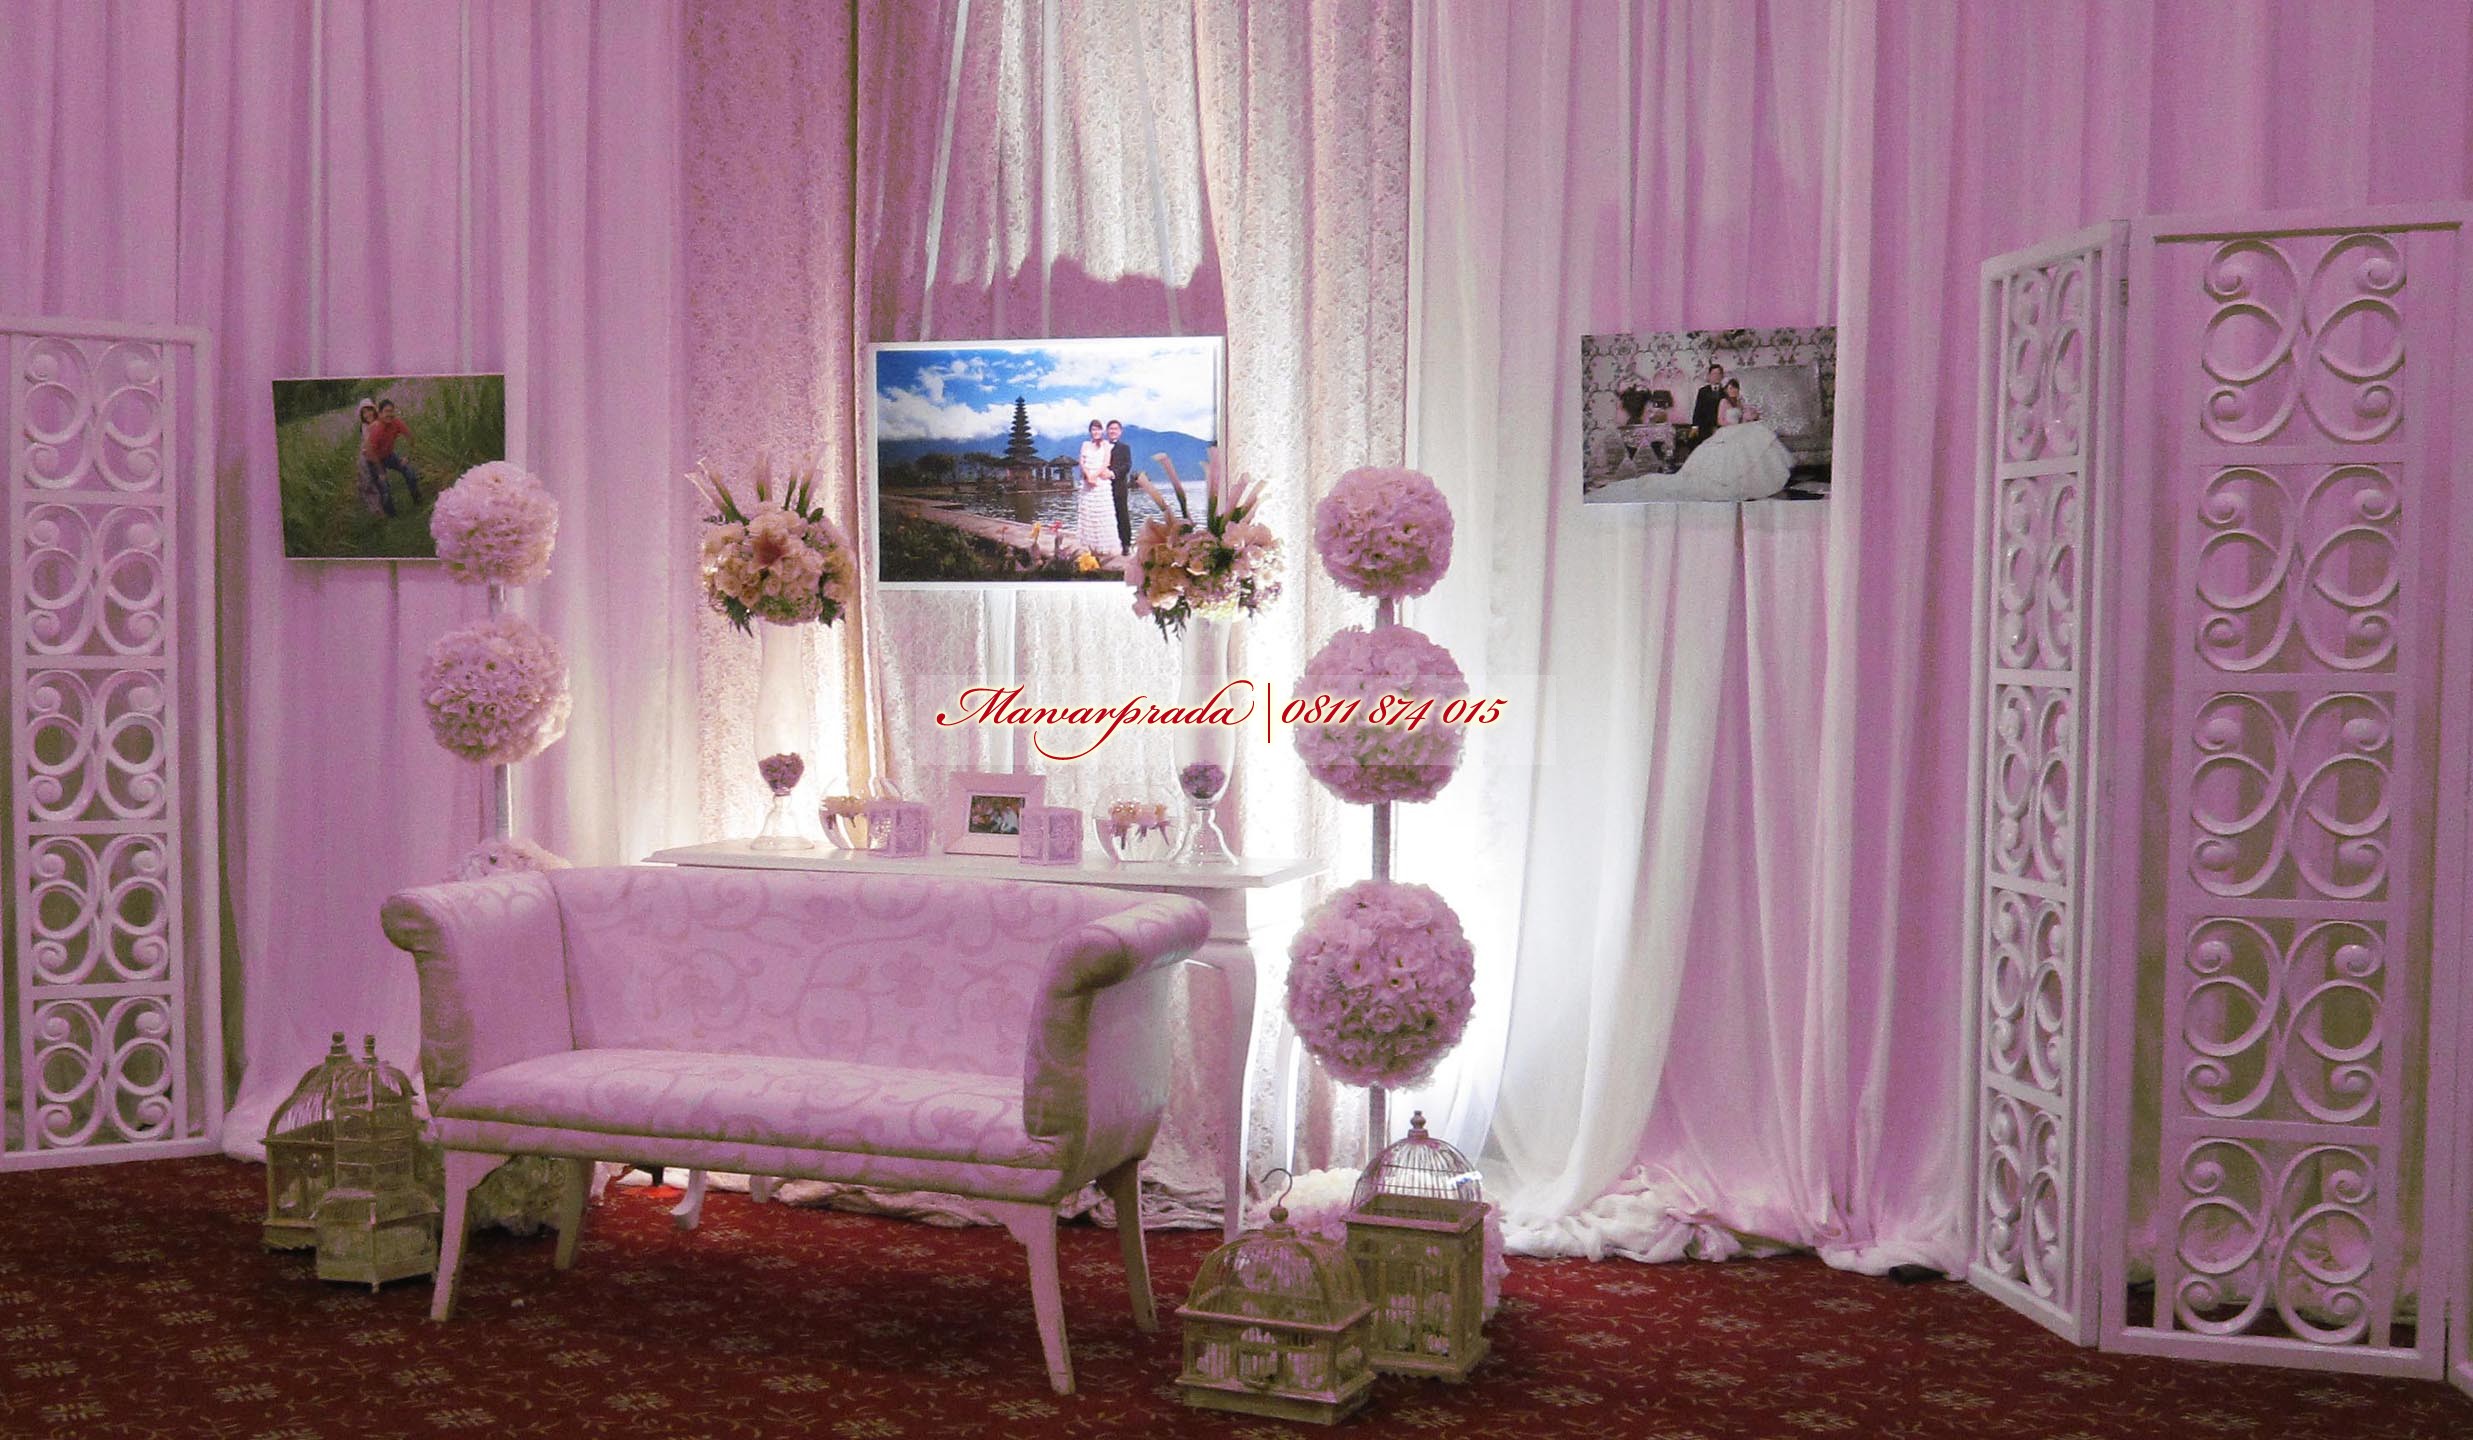  dekorasi  photobooth simple minimalis  Mawar Prada 